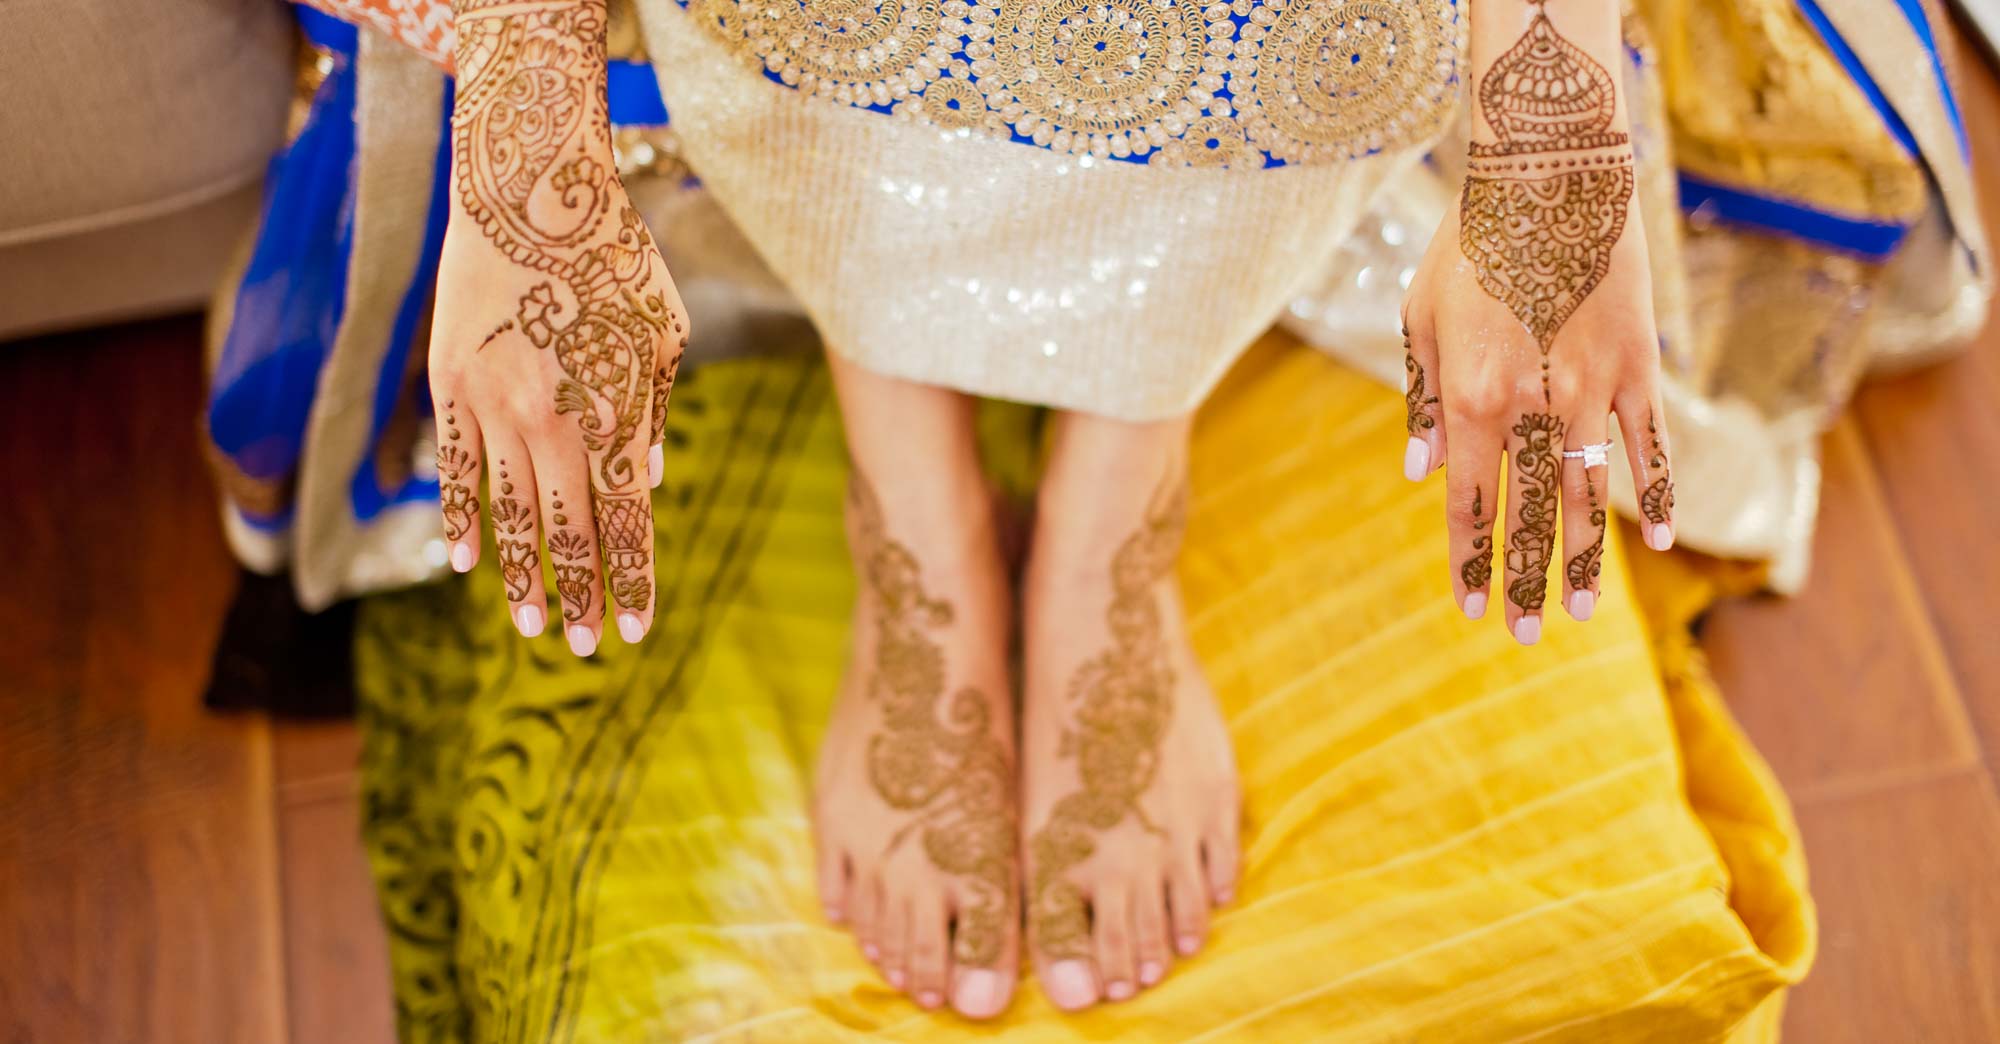 Mansi’s Henna Party – Indian Wedding Los Angeles featured slider image